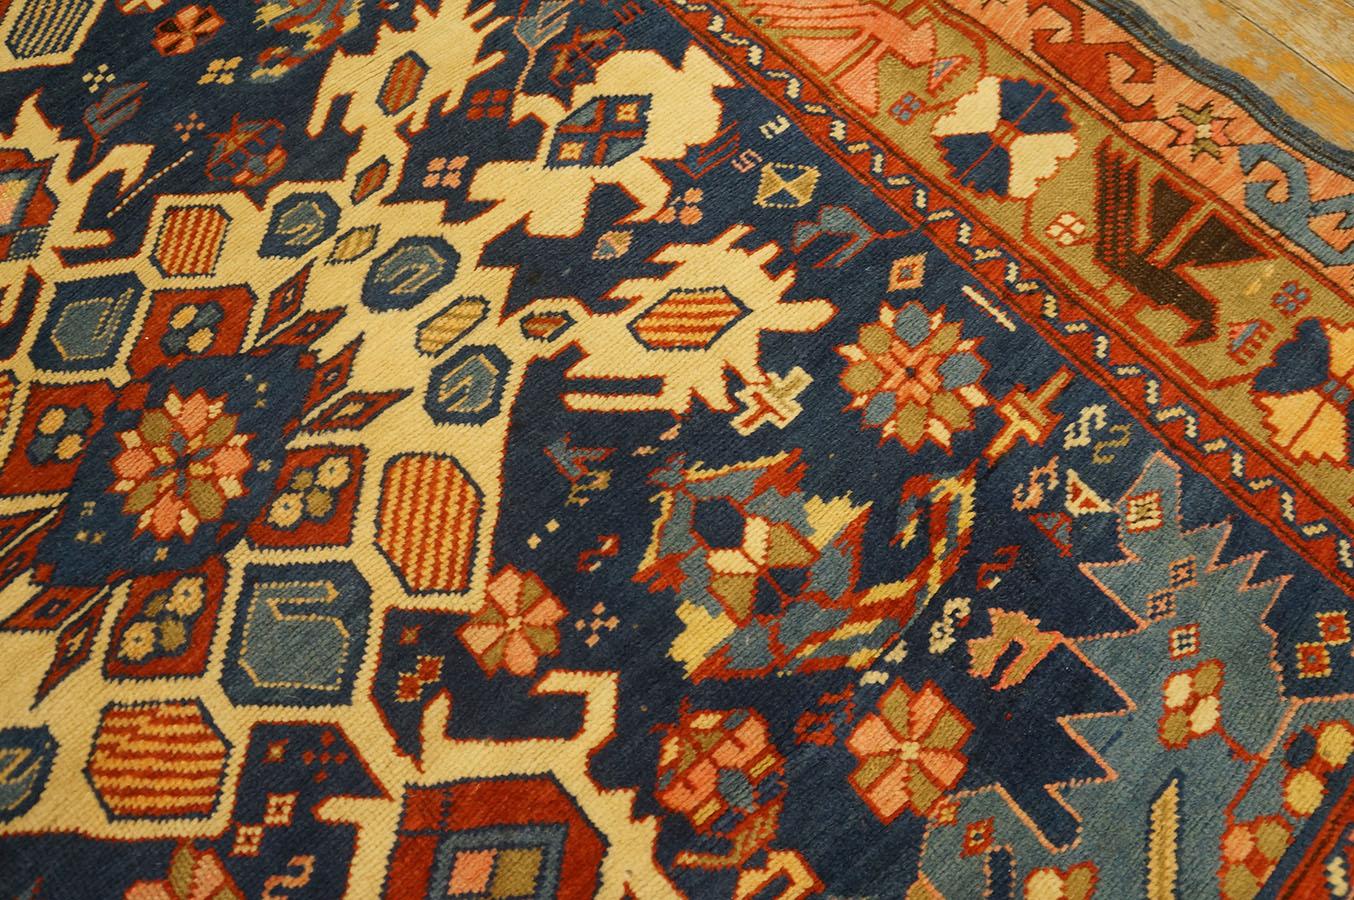 Late 19th Century Caucasian Bidjov Carpet ( 4'6'' x 5'8'' - 122 x 183 cm) For Sale 5